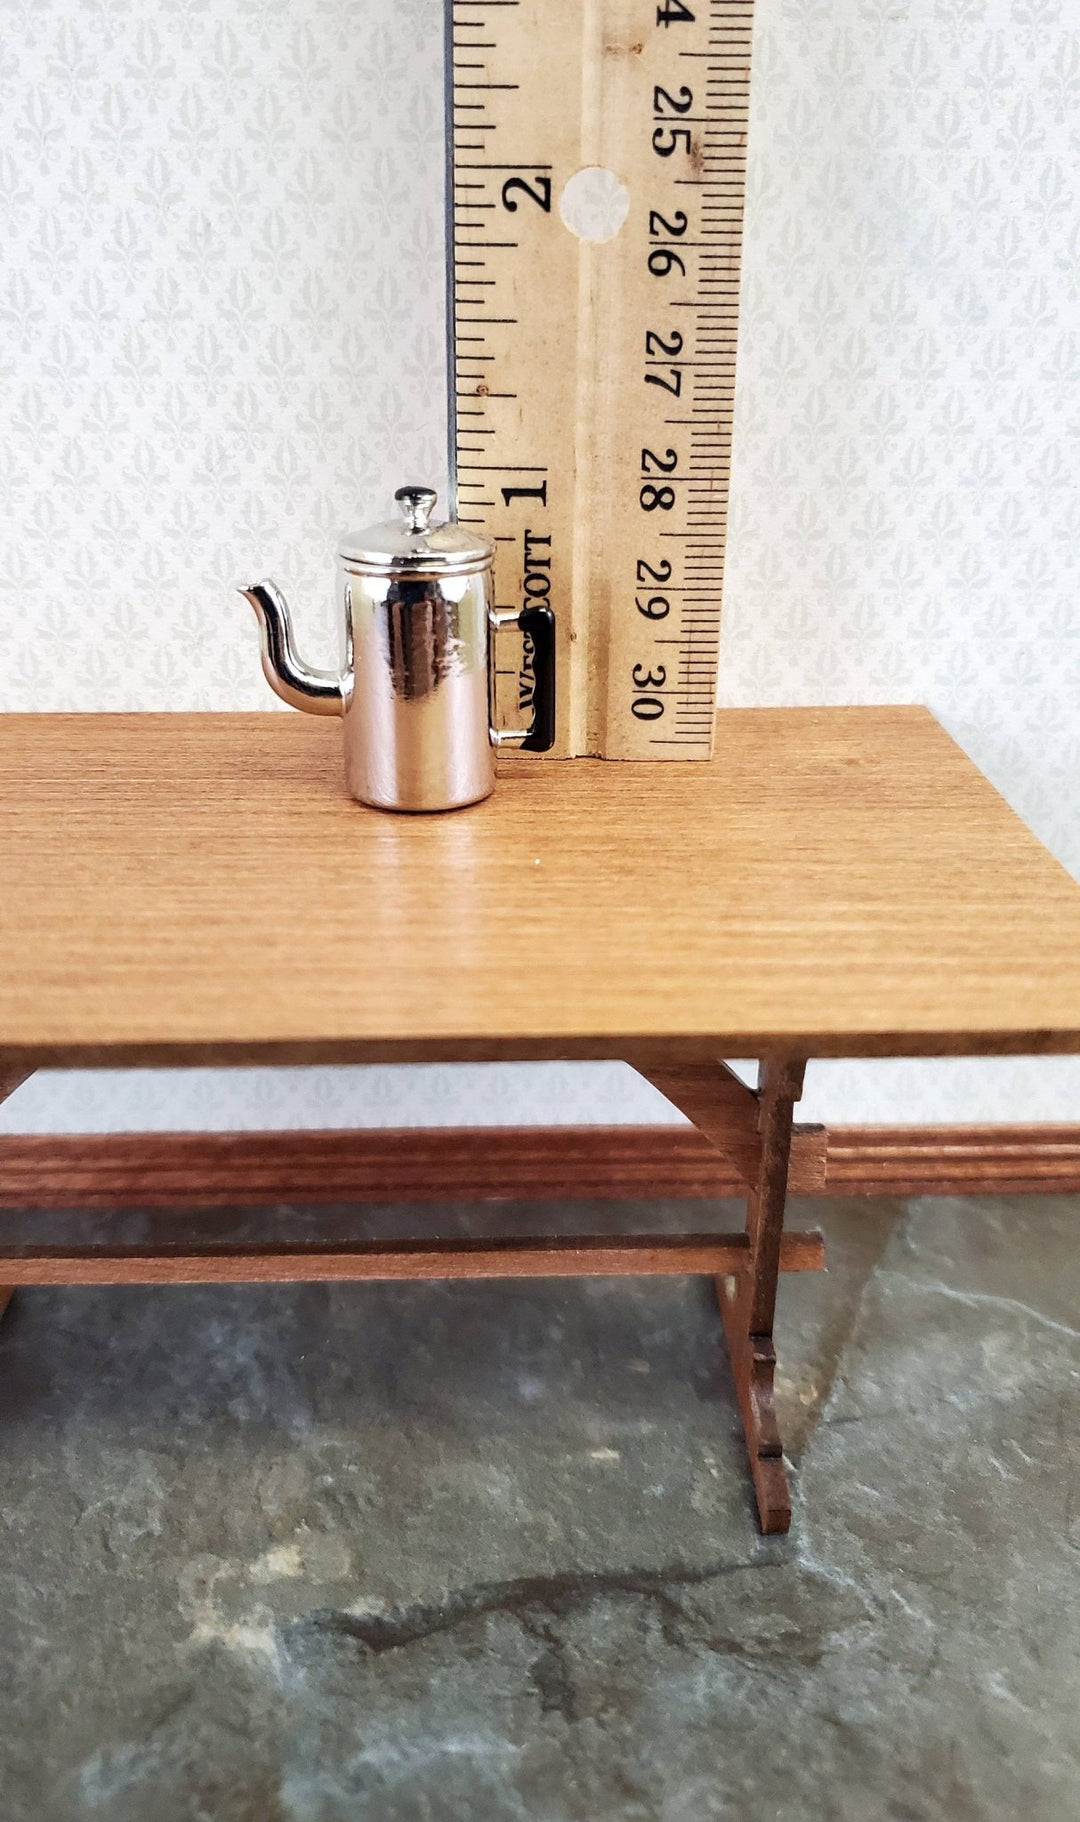 Dollhouse Miniature Coffee Pot Tall Silver & Black Metal 1:12 Scale Kitchen Accessories - Miniature Crush